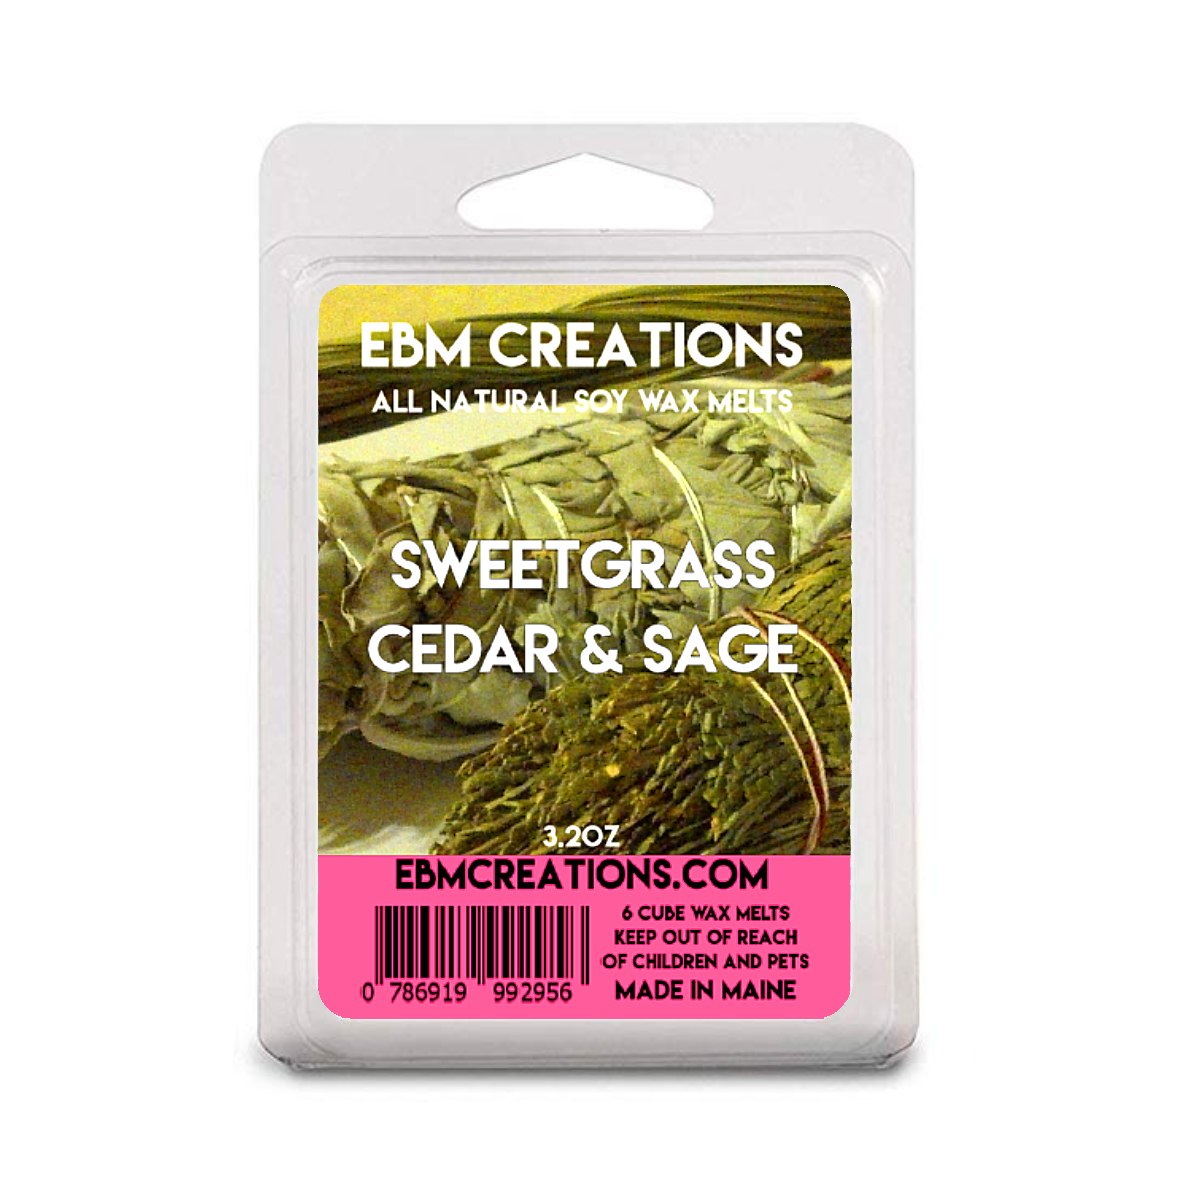 Sweetgrass Cedar & Sage  - 3.2 oz Clamshell